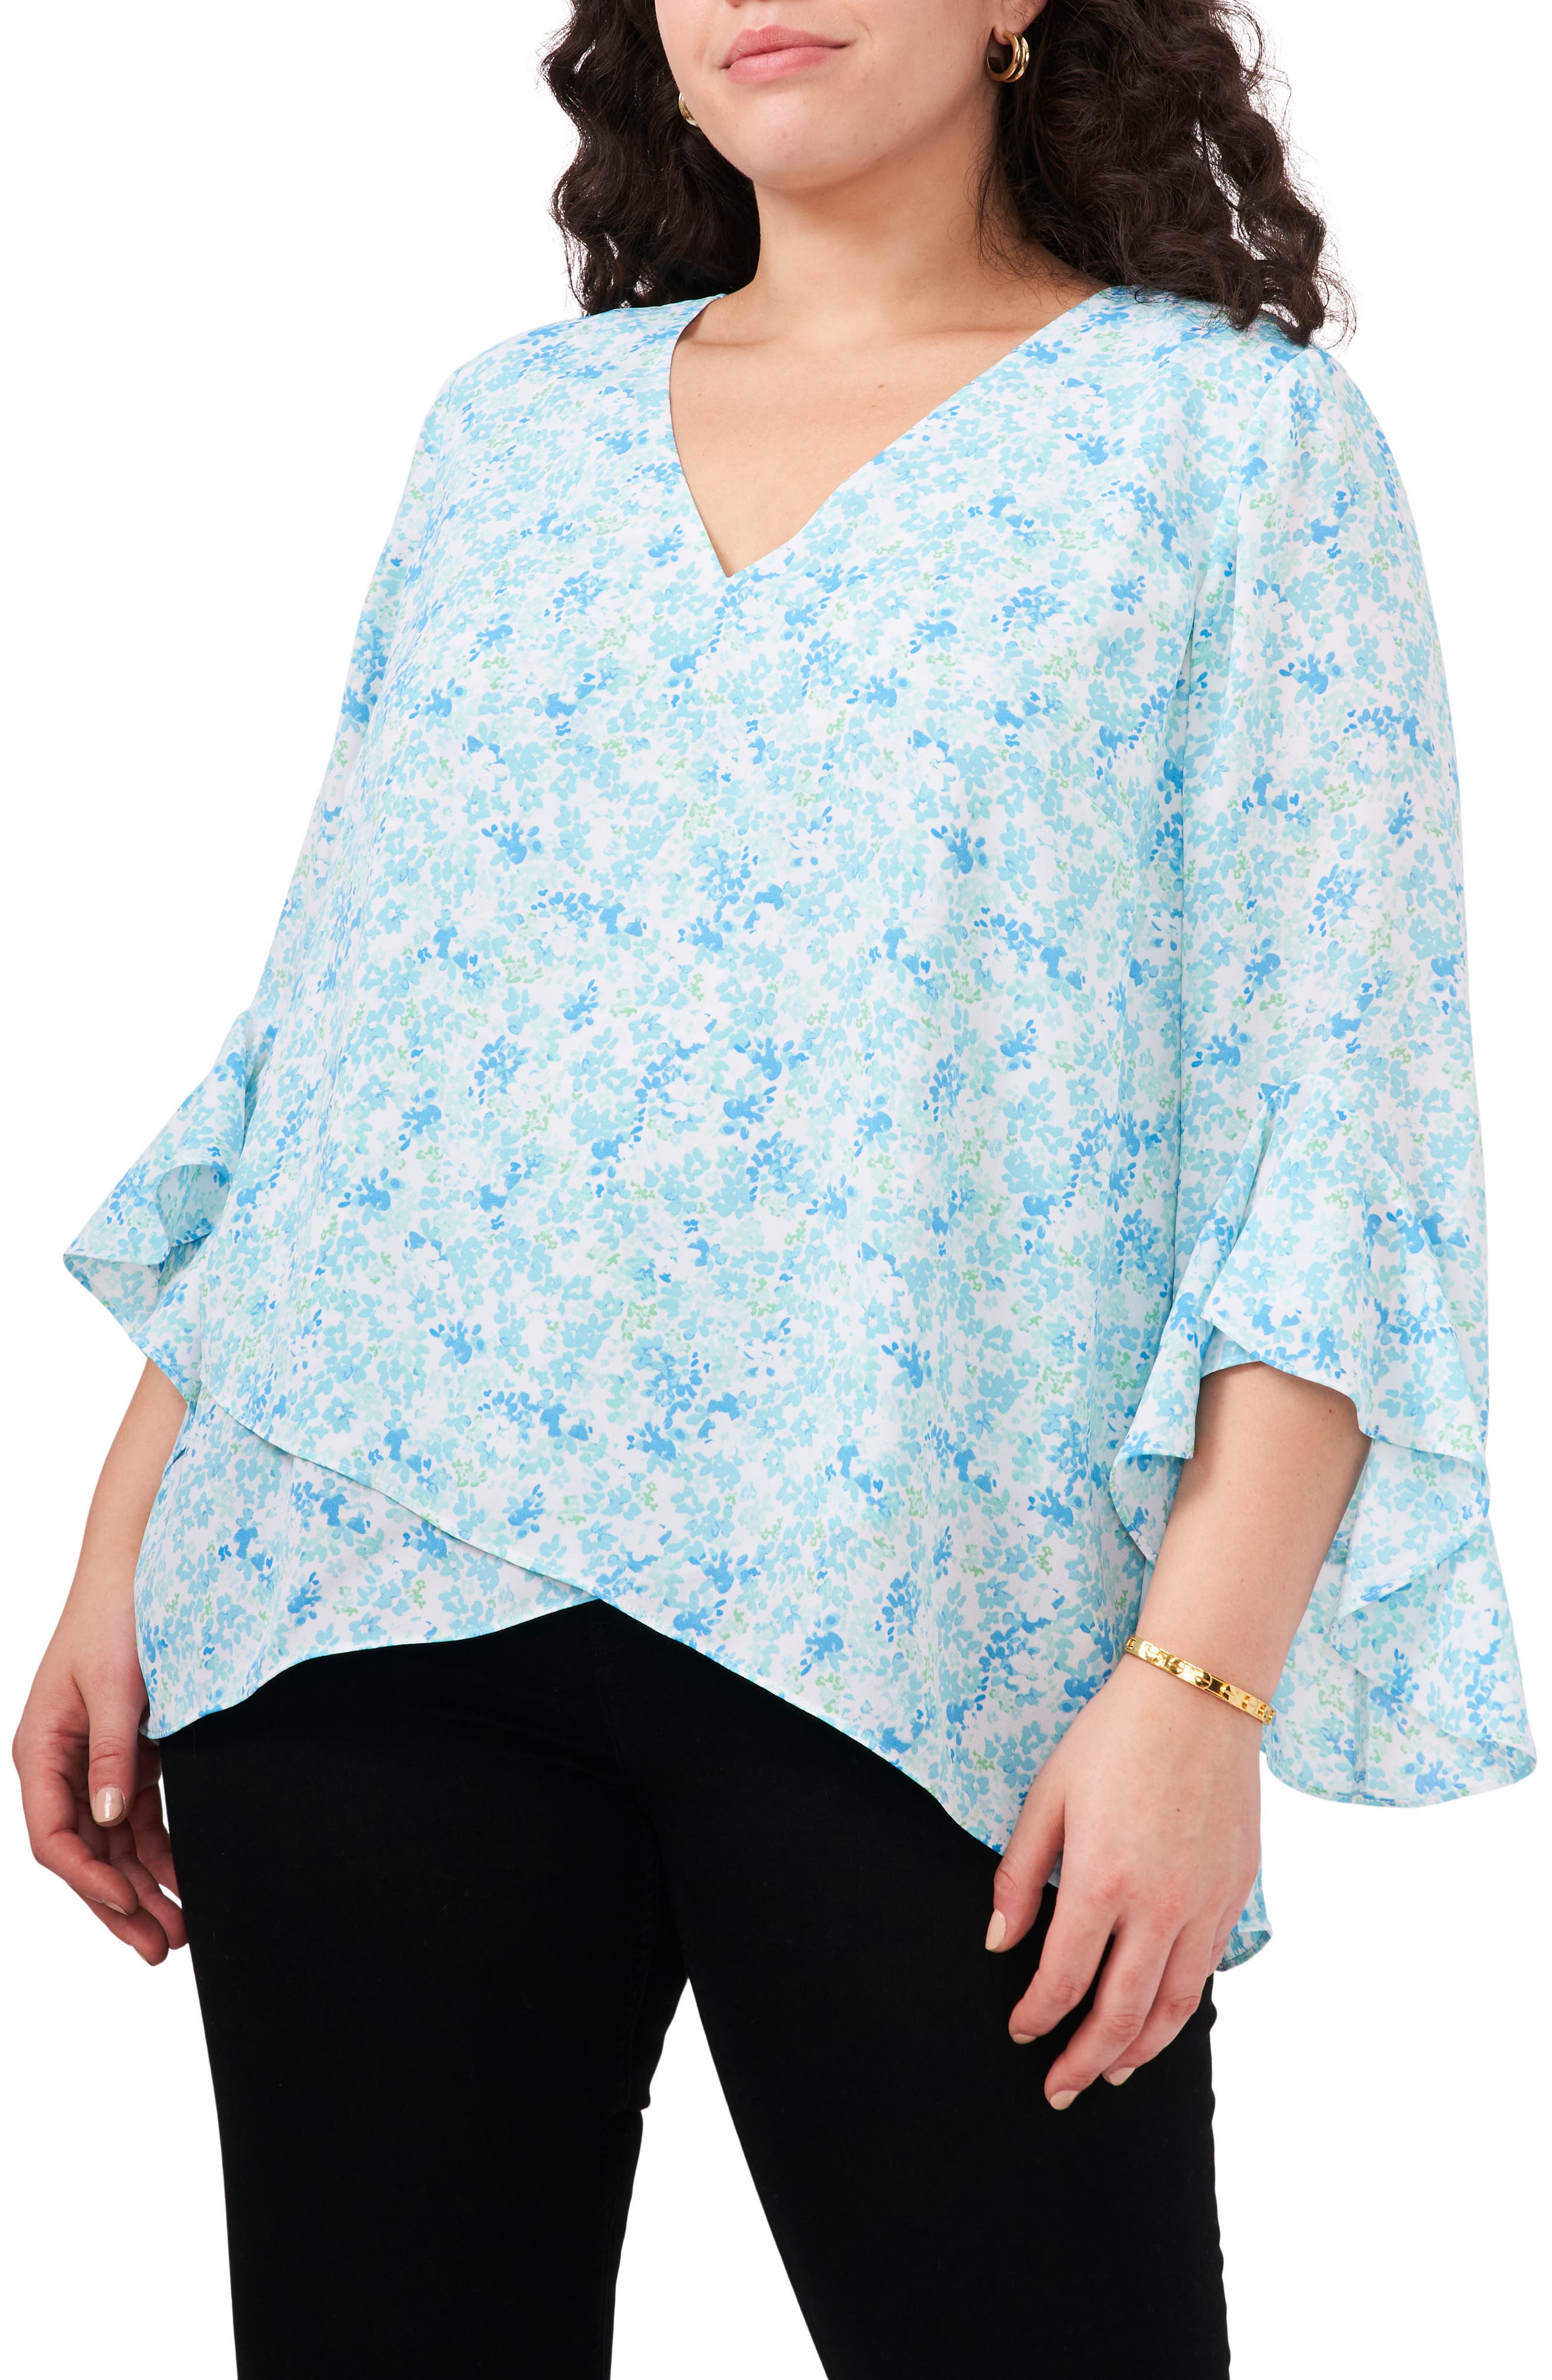 New CANARI Women's Plus Size 3/4 Sleeve White V Neck Top-Blouse Sizes